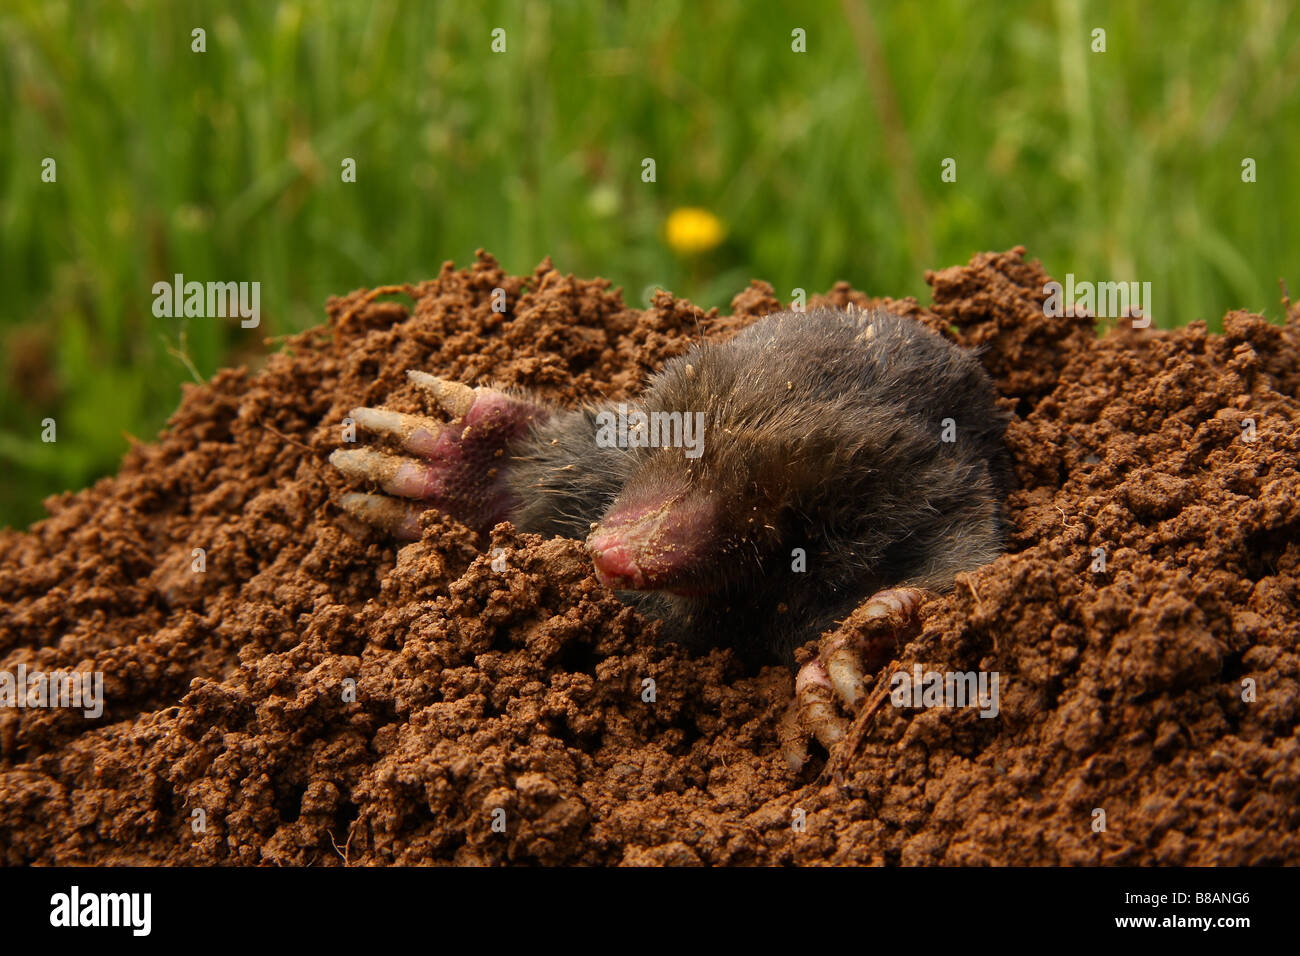 A mole emerging from a molehill. Stock Photo